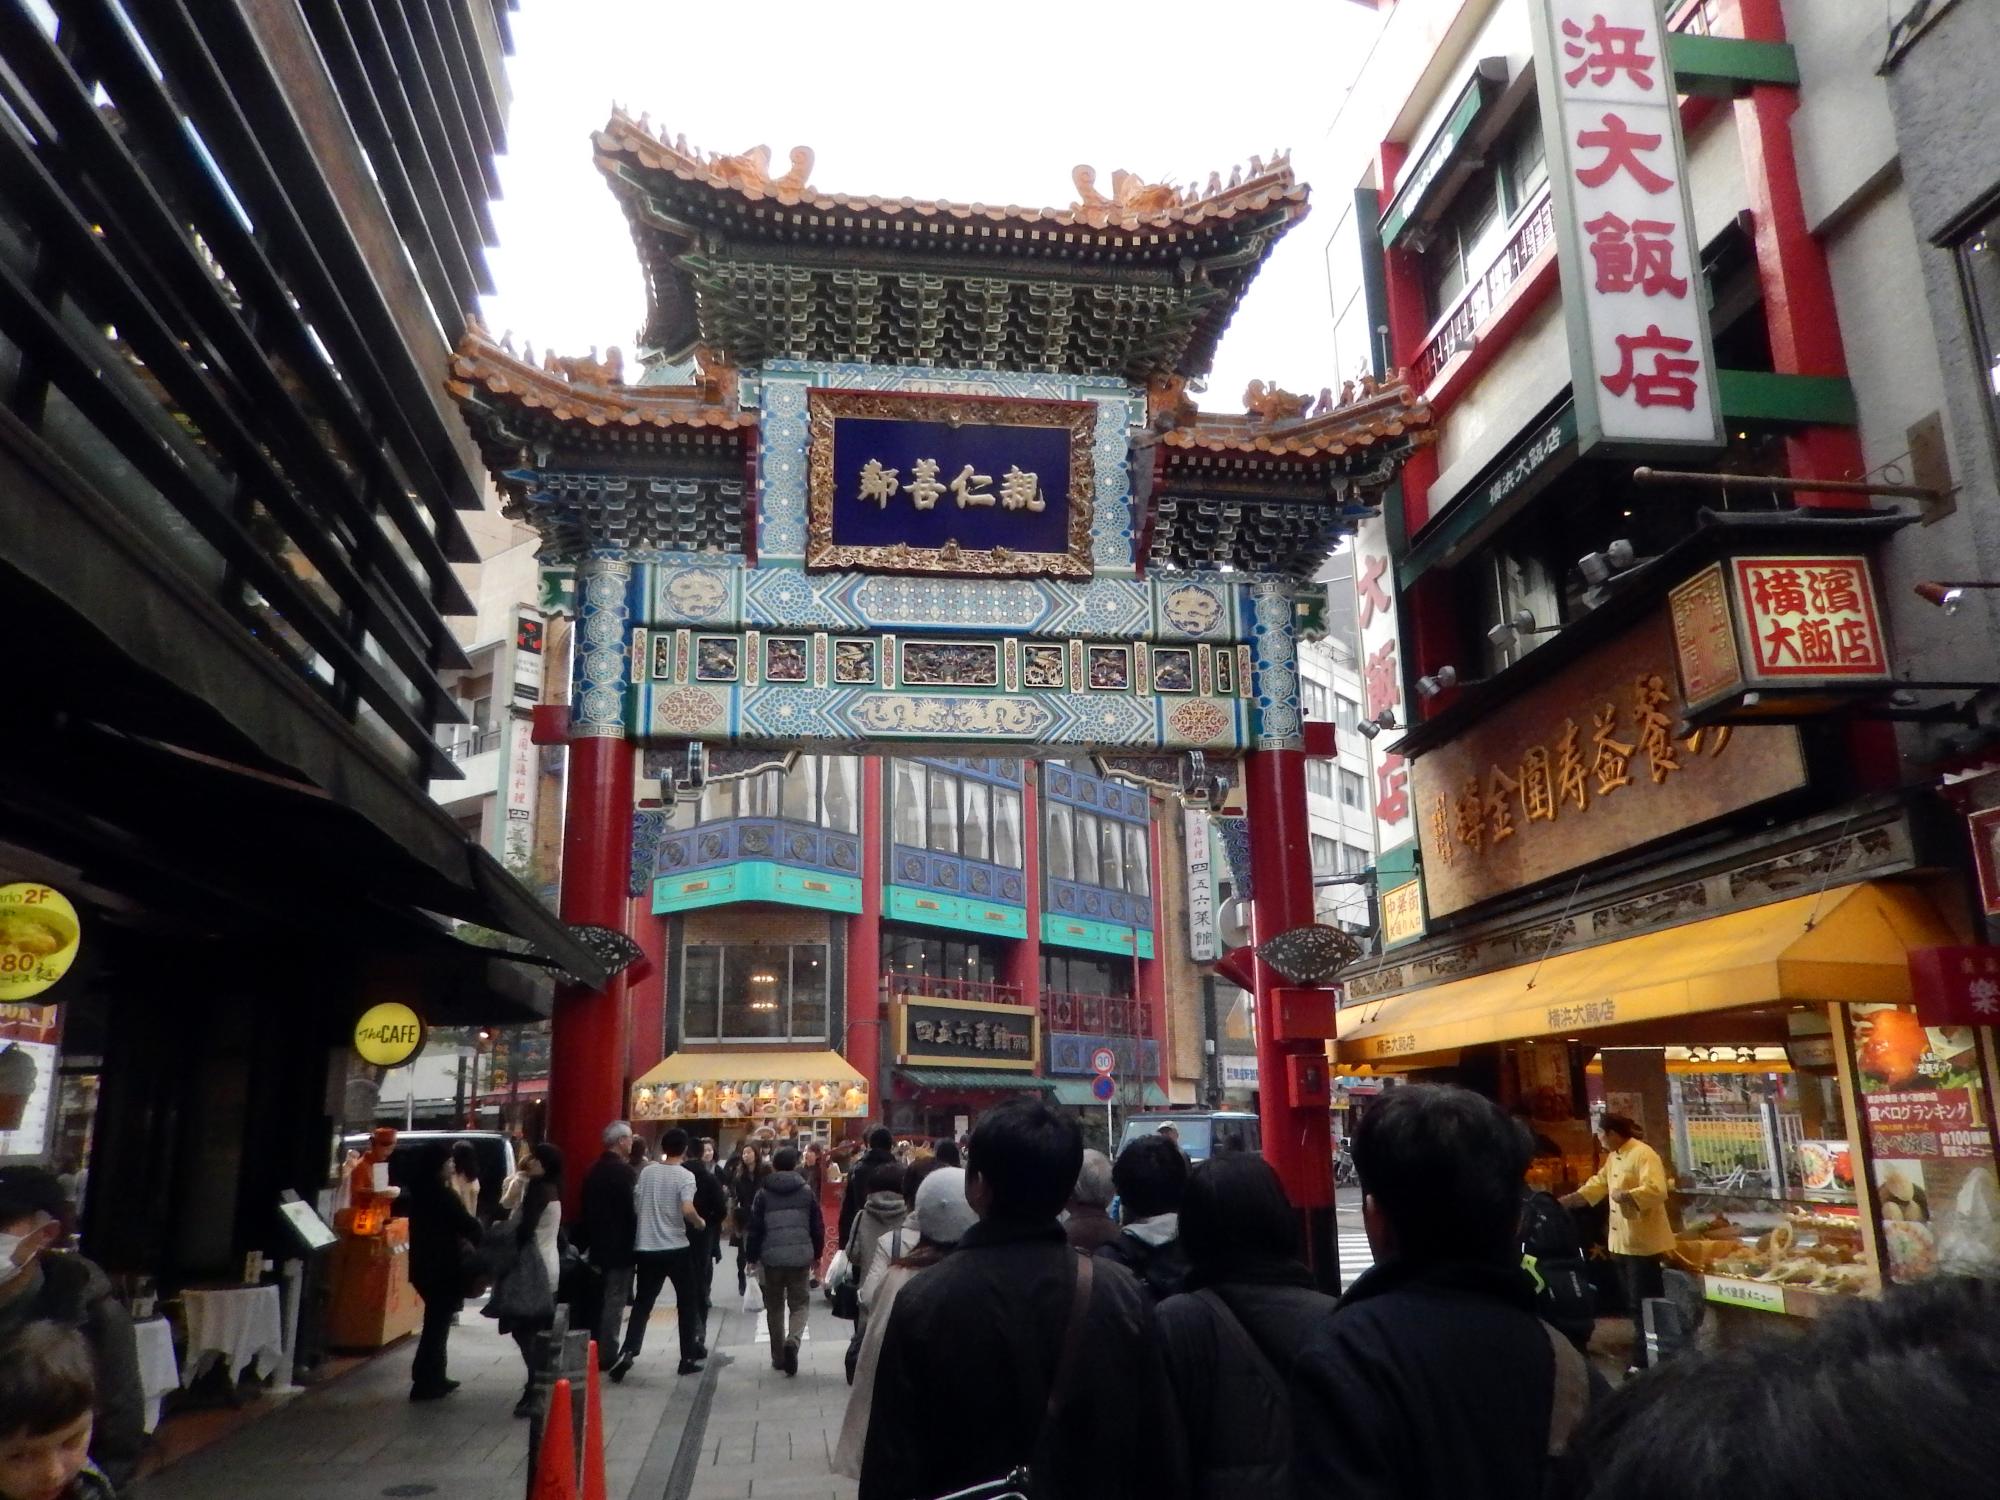 Japan (2015) - Chinatown Entrance #2